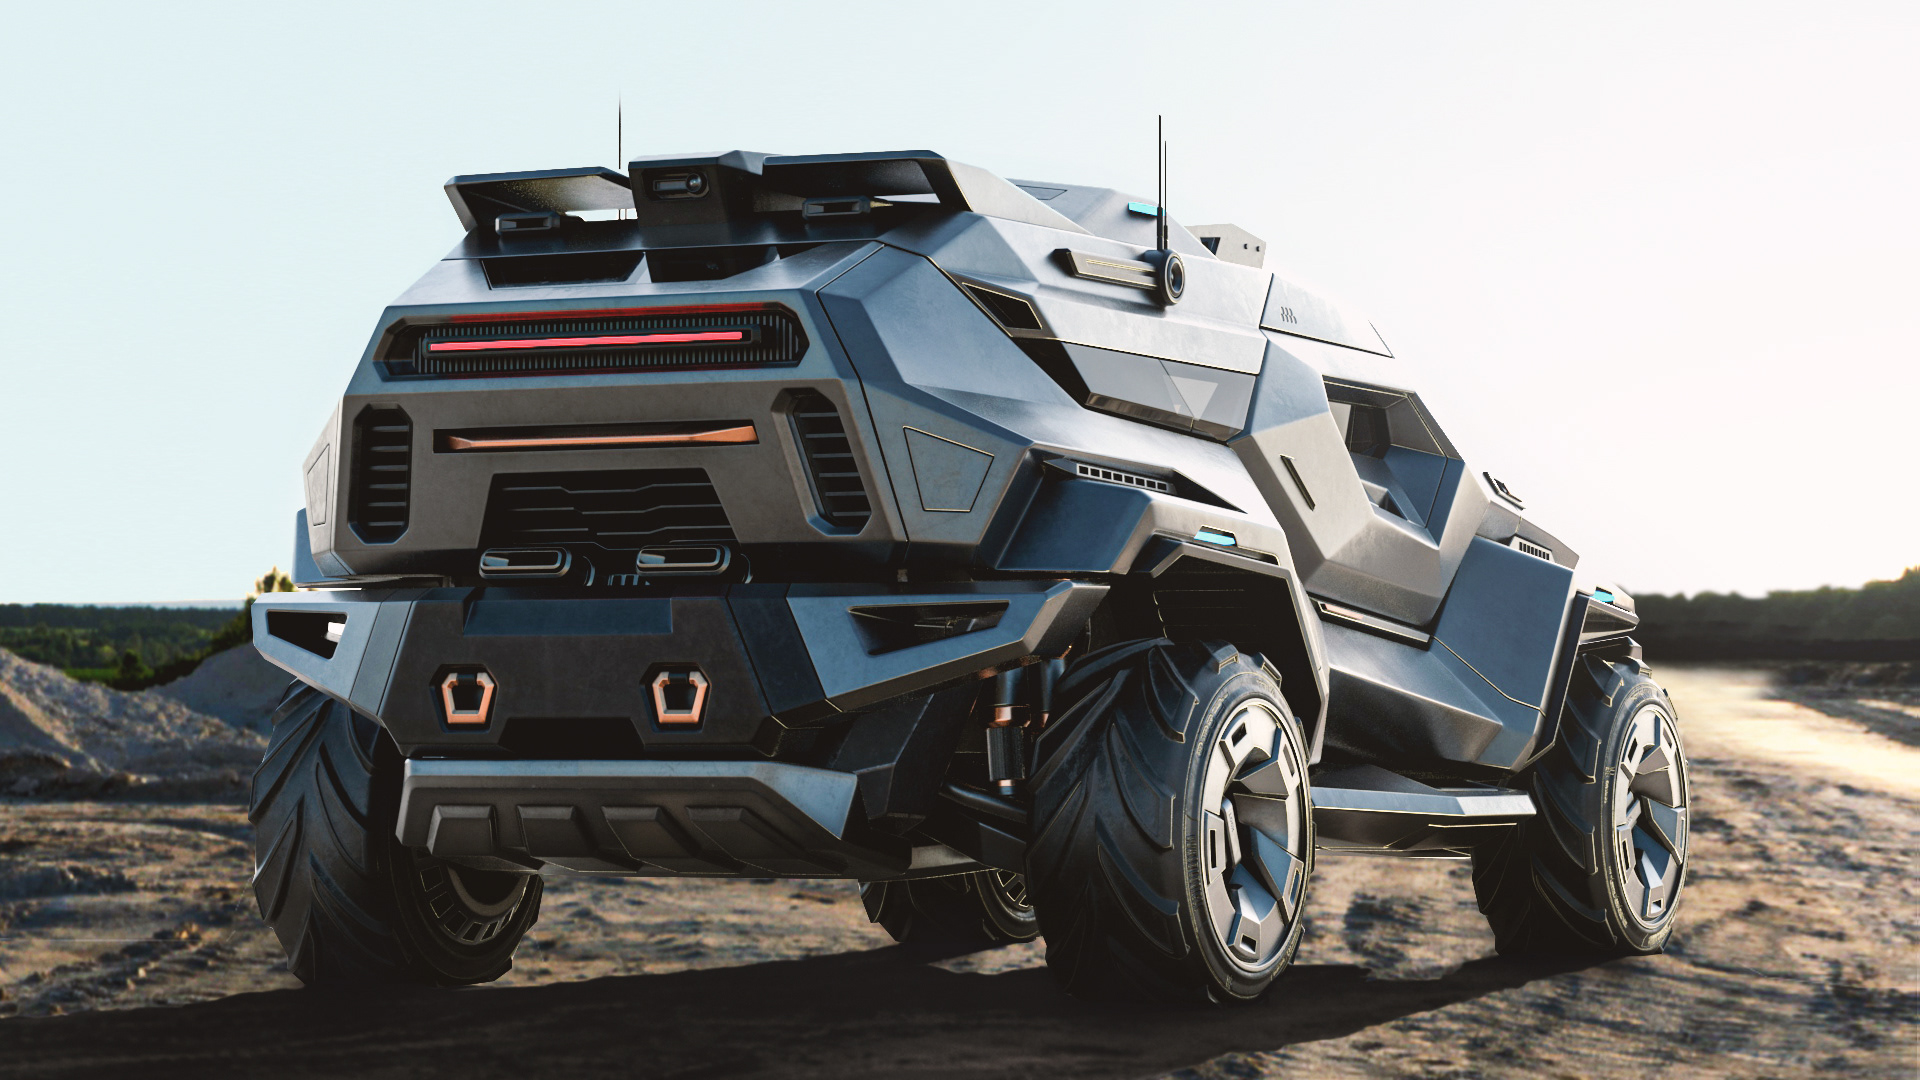 Desert Armortruck SUV Concept by Milen Ivanov